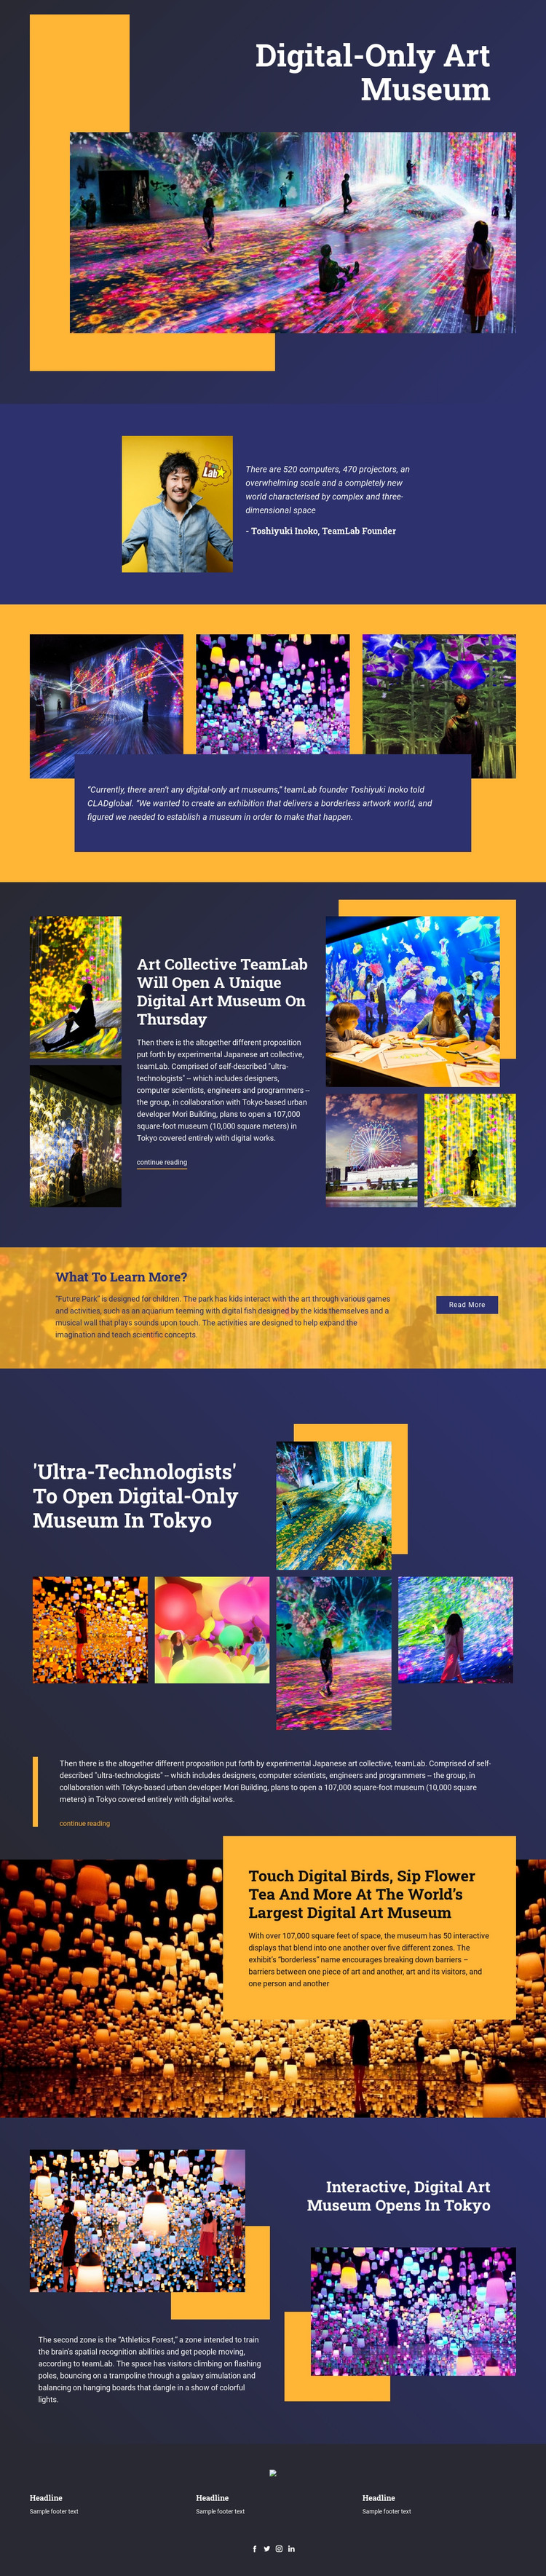 Digital Art Museum Homepage Design